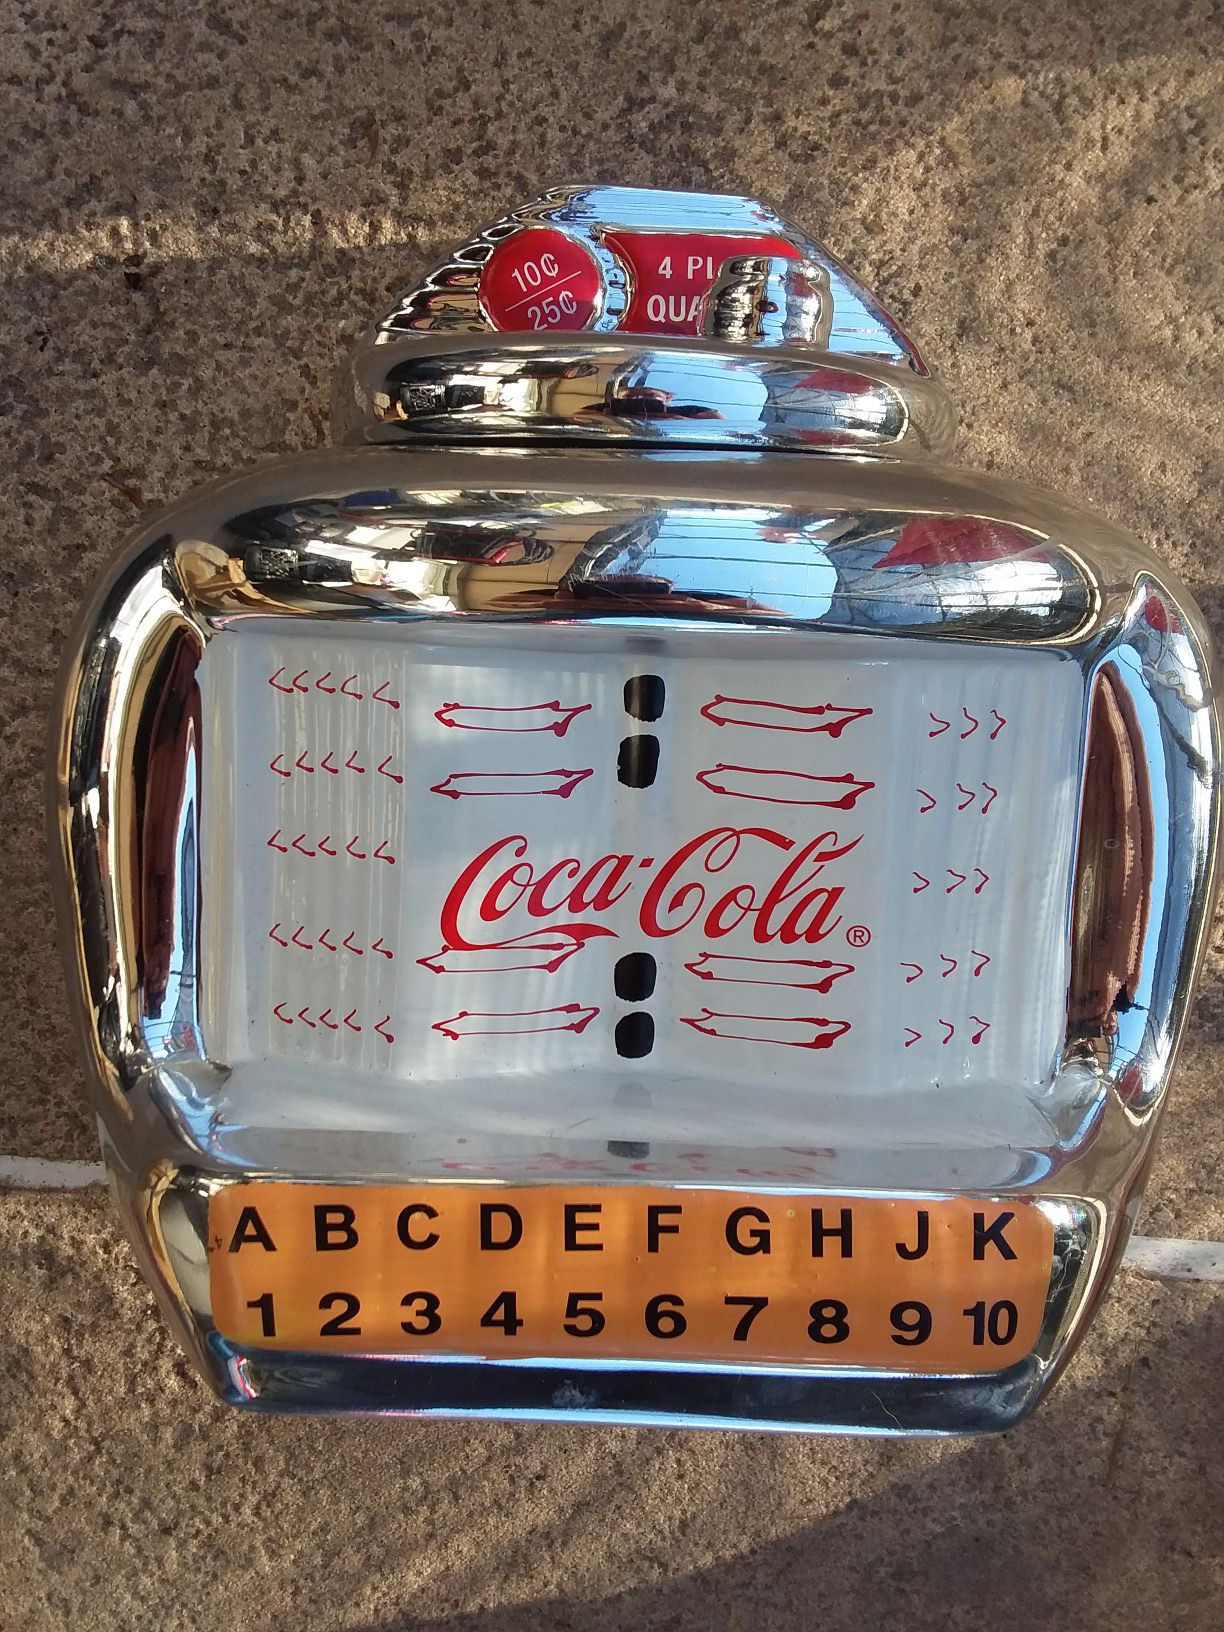 Coca-cola coke jukebox cookie jar